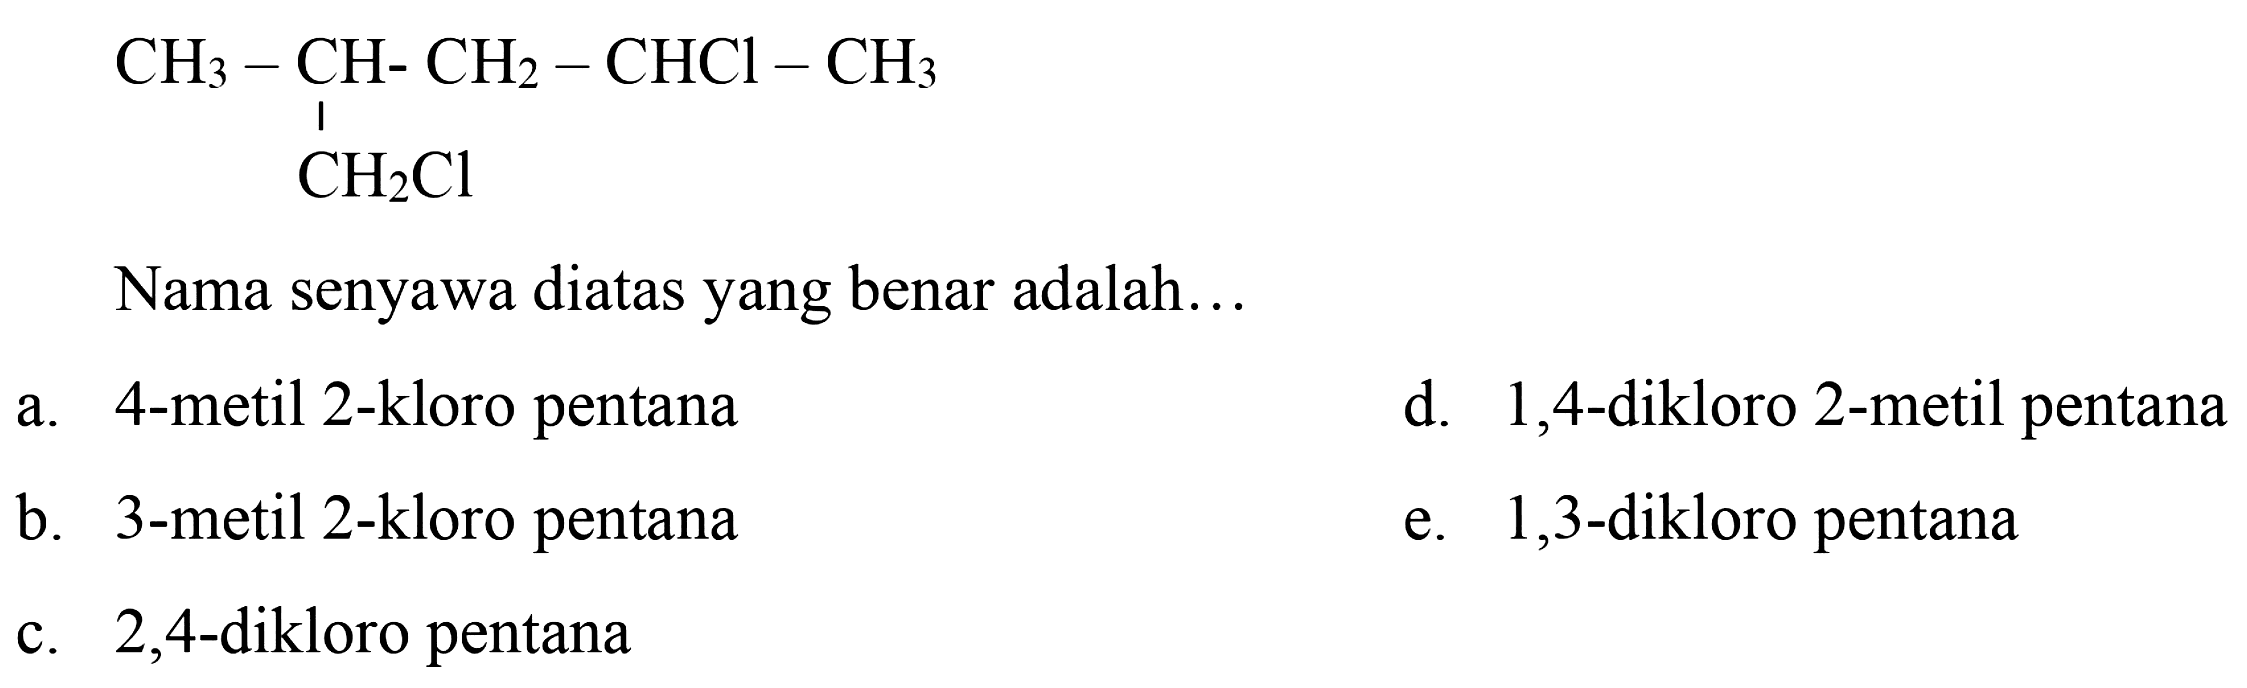 CH3-CH-CH2-CHCl-CH3 CH2Cl Nama senyawa diatas yang benar adalah ... a. 4-metil 2-kloro pentana b. 3-metil 2-kloro pentana c. 2,4-dikloro pentana d. 1,4-dikloro 2-metil pentana e. 1,3-dikloro pentana 